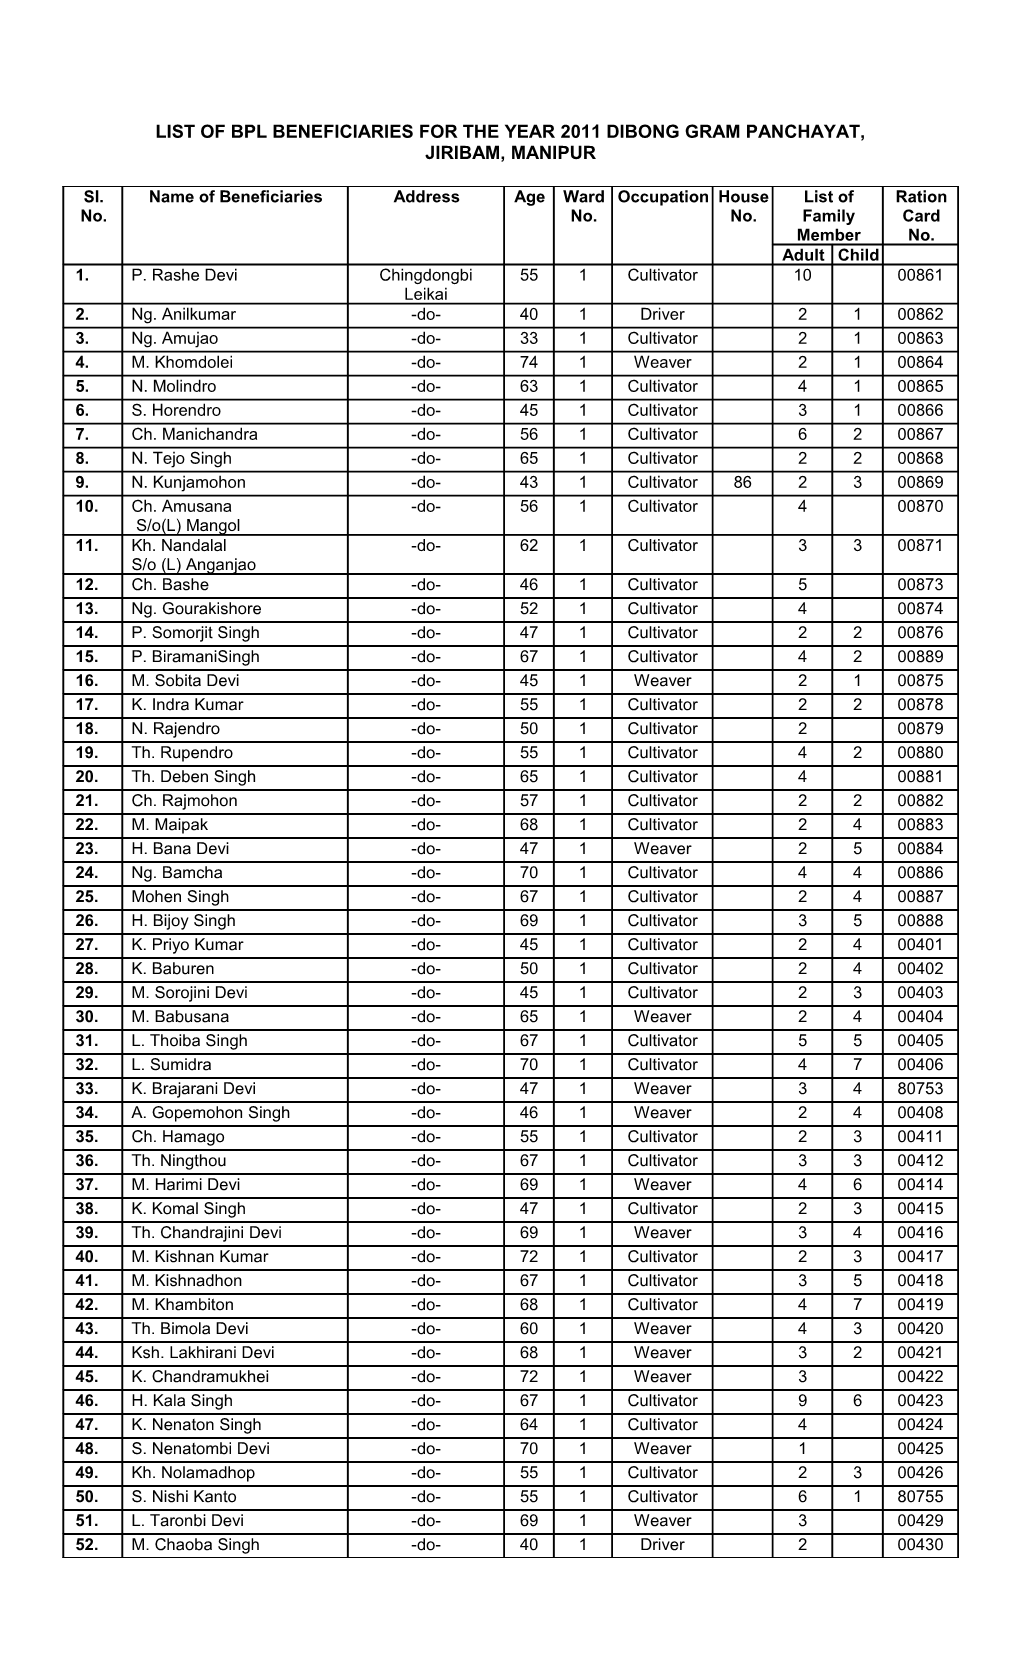 List of Bpl Beneficiaries for the Year 2011 Dibong Gram Panchayat